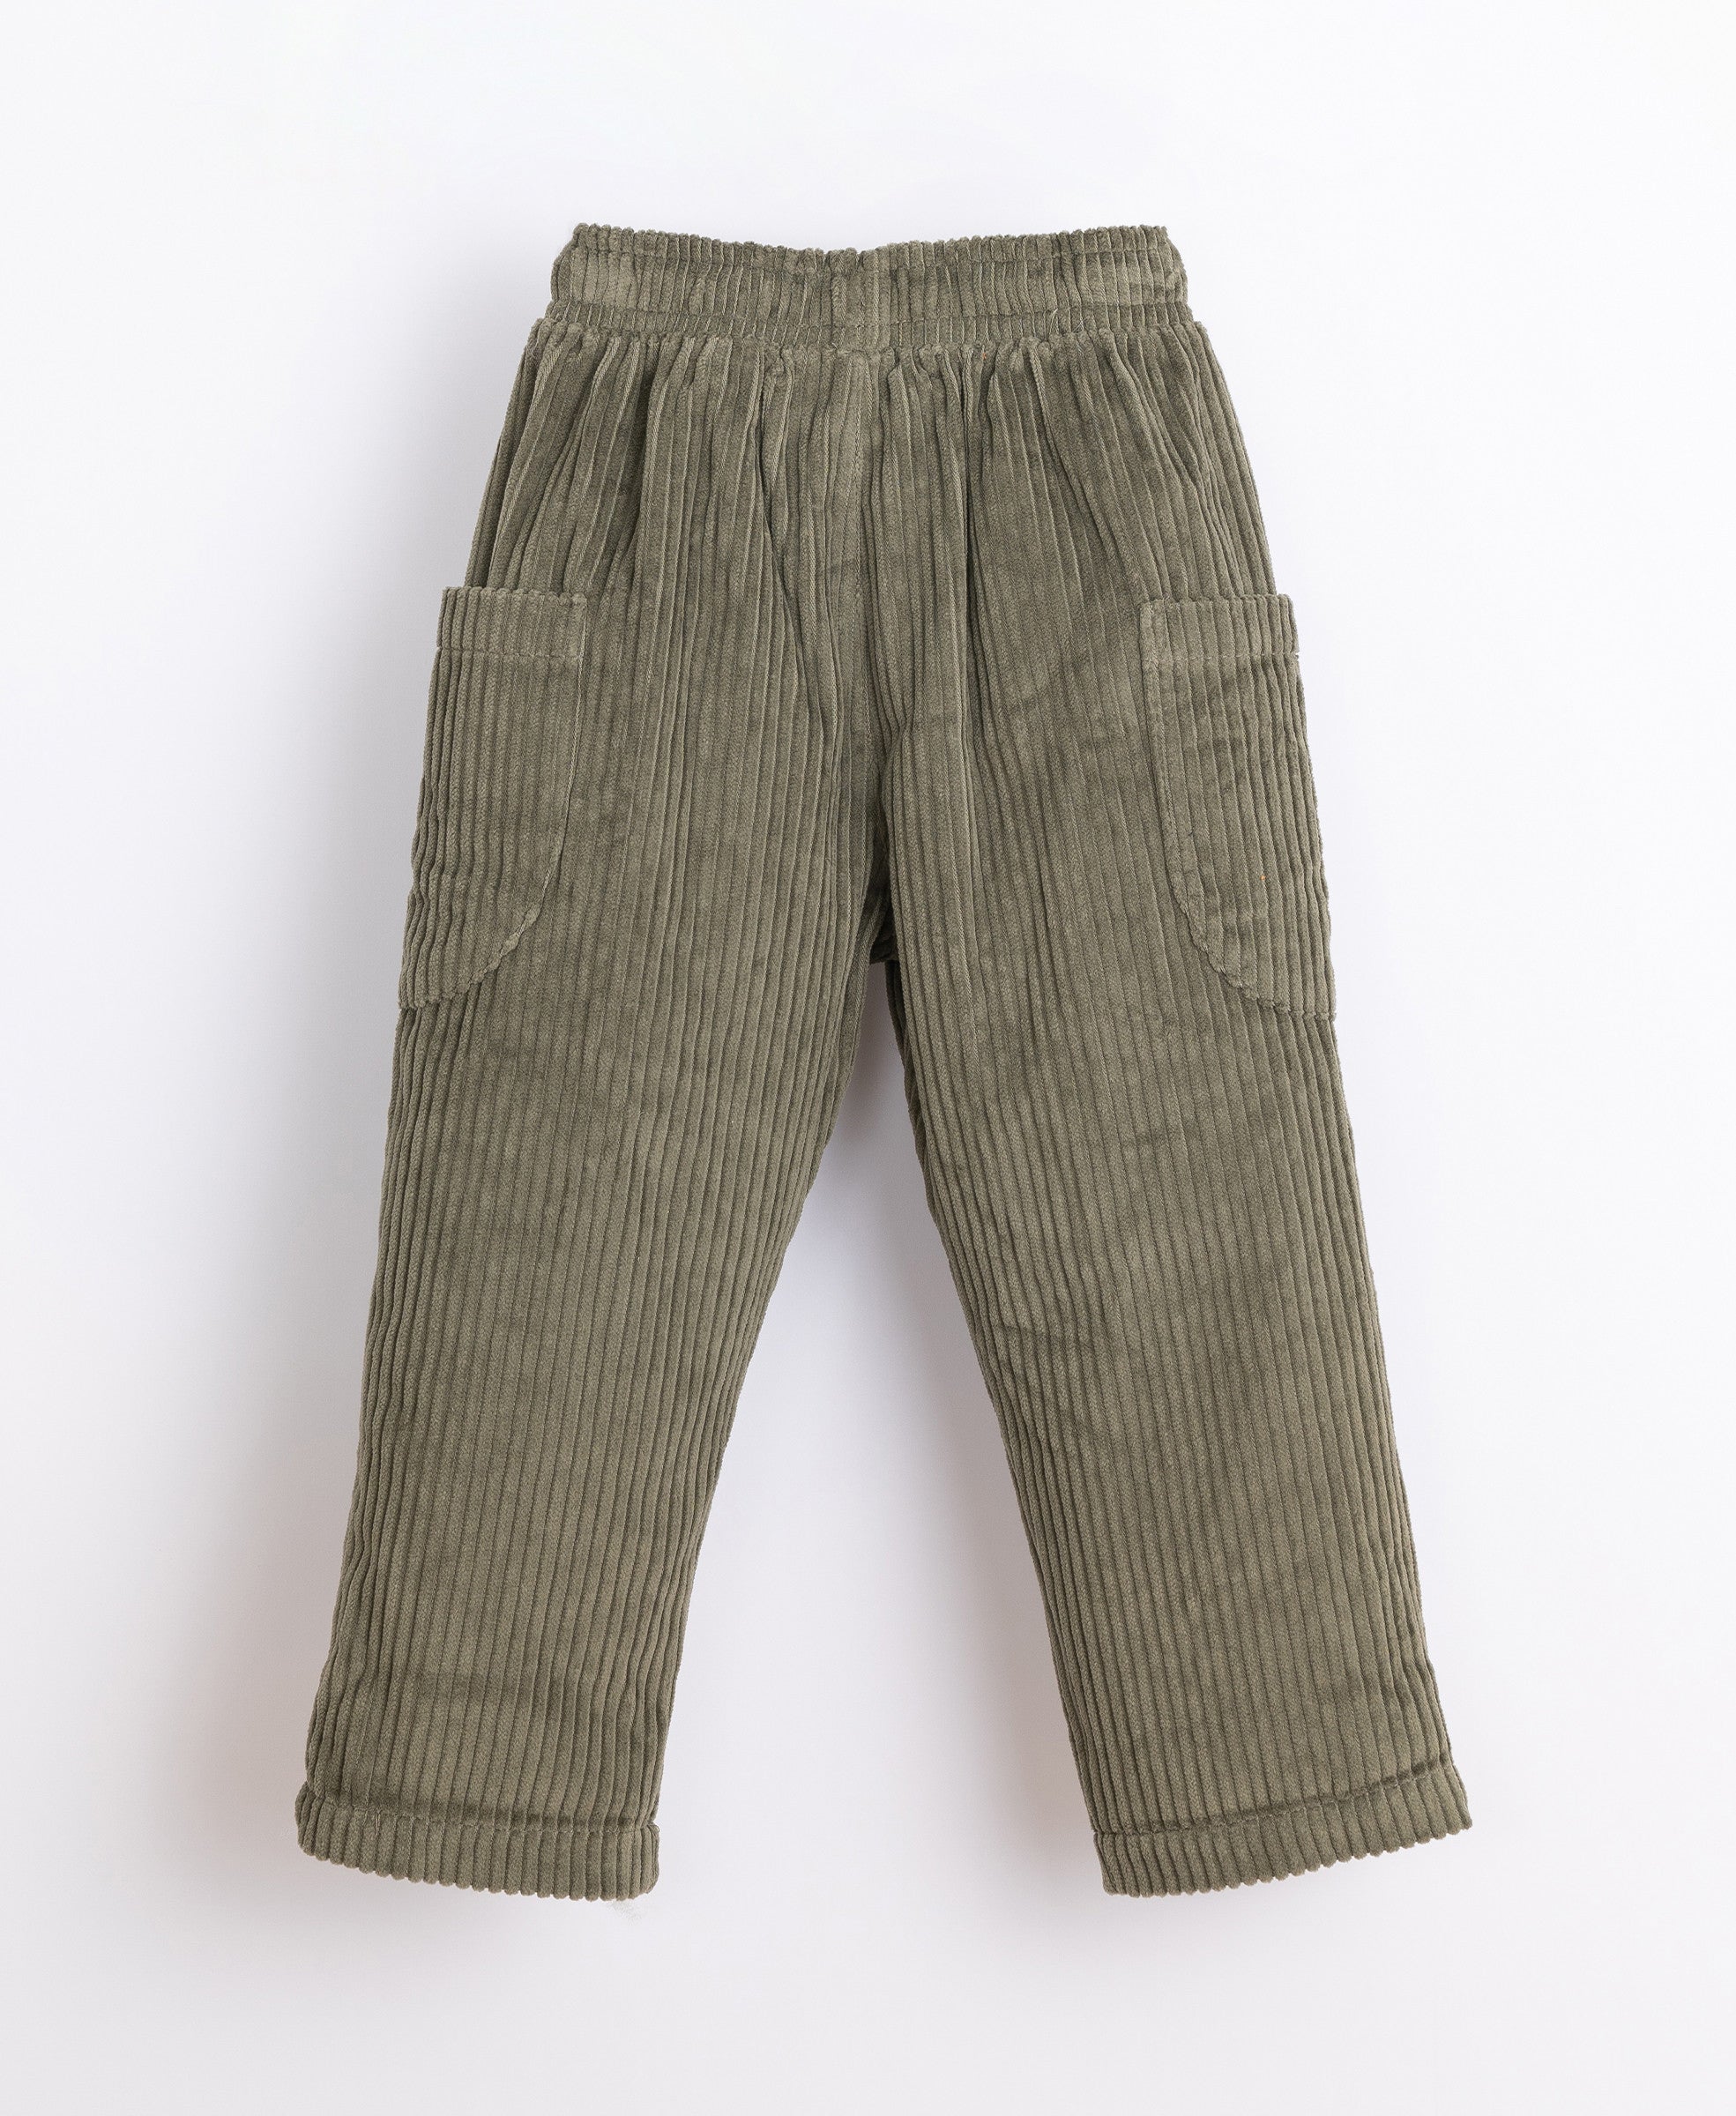 Organic cotton pants